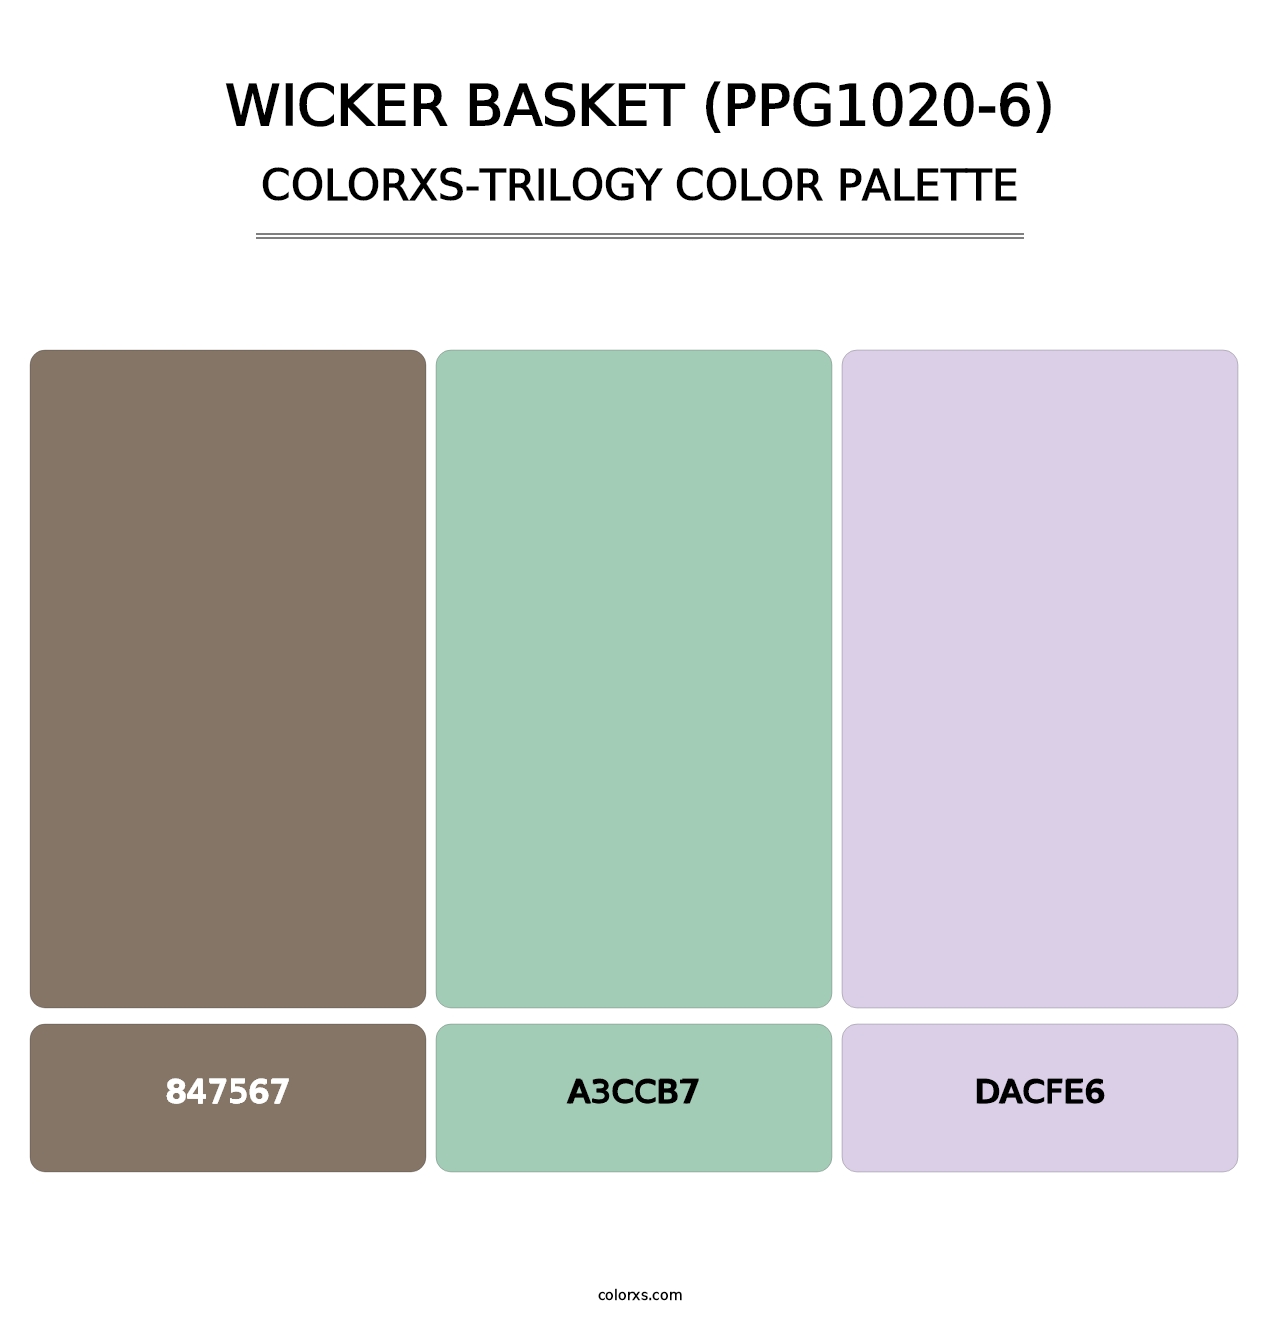 Wicker Basket (PPG1020-6) - Colorxs Trilogy Palette